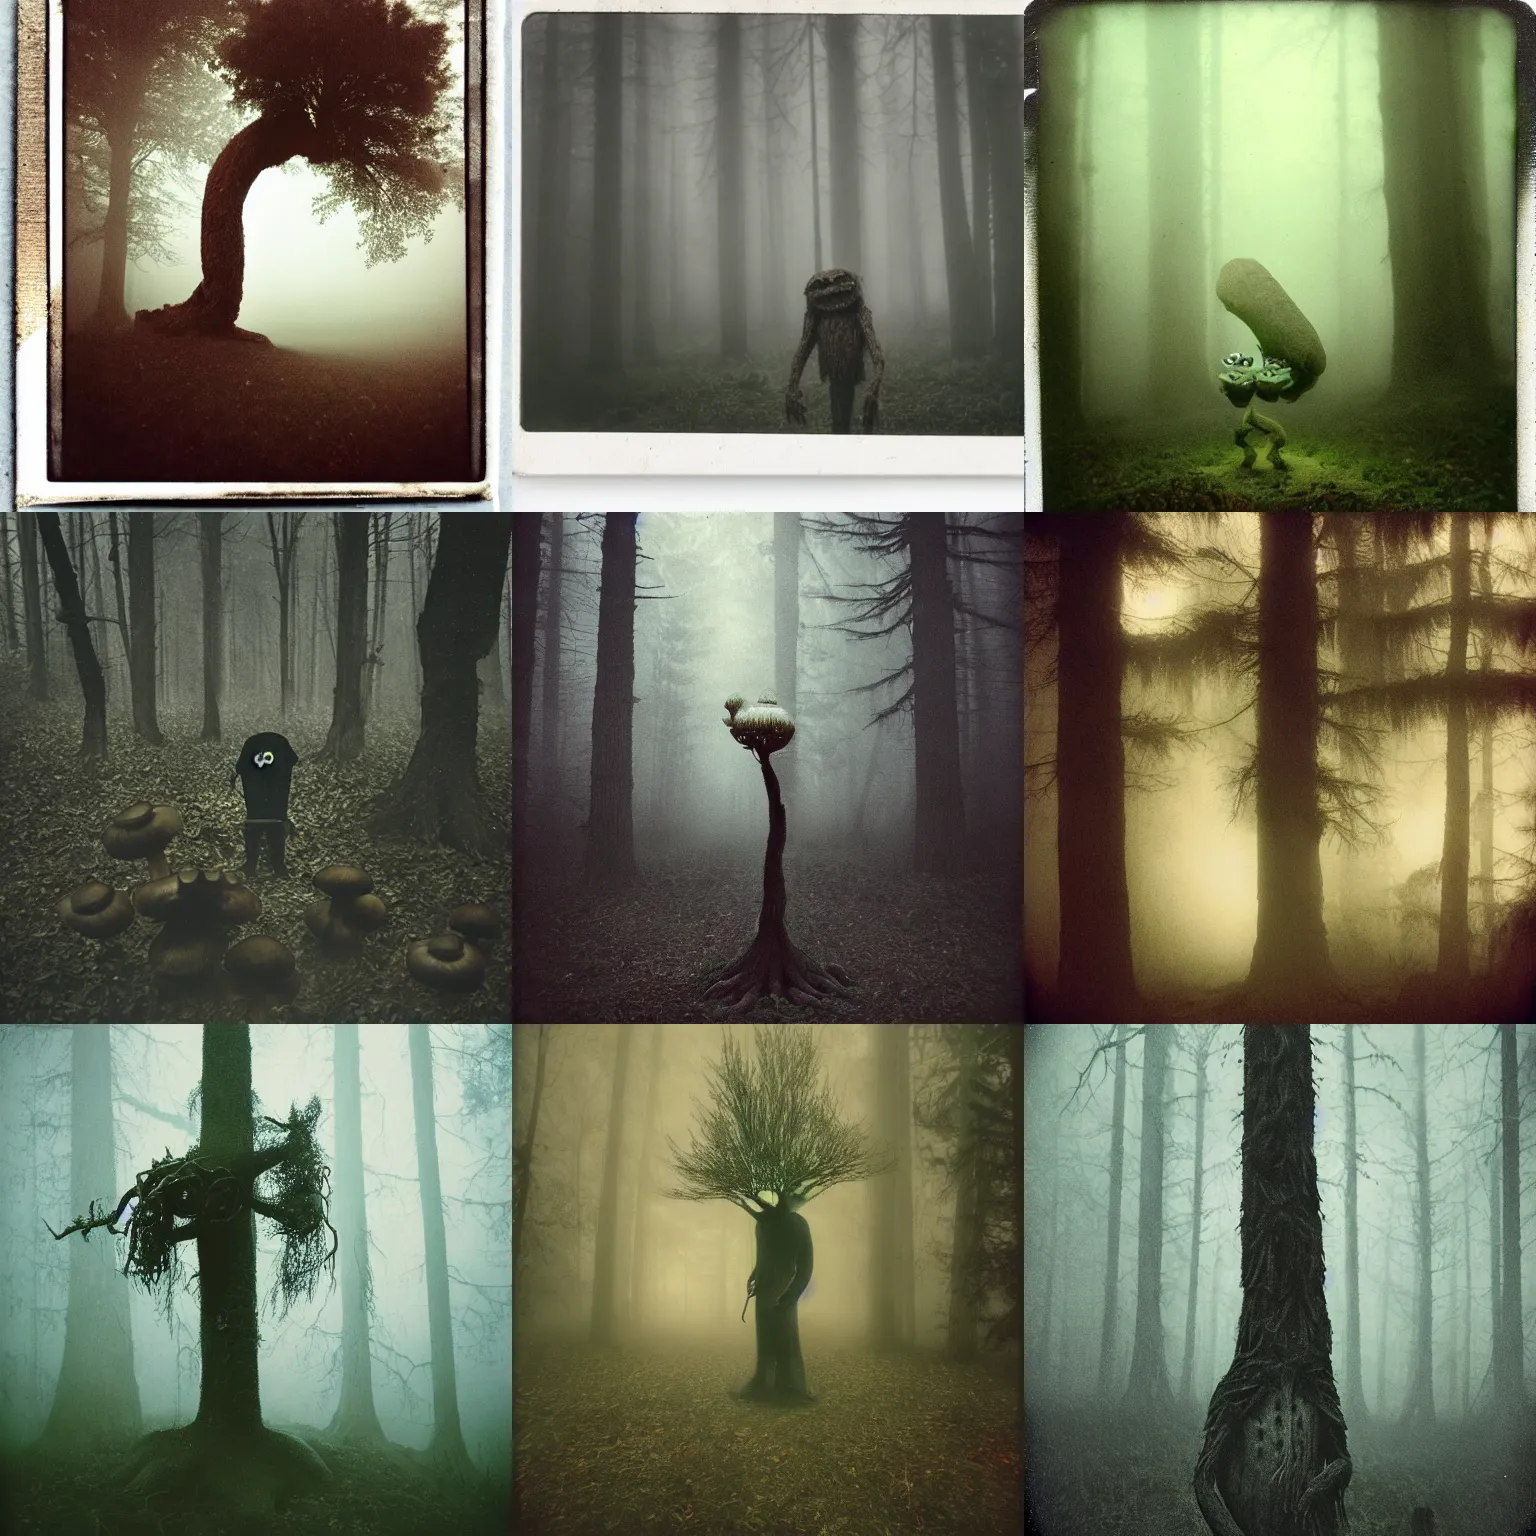 Prompt: anthropomorphic tree creature eating mushrooms, cryptid, dark fantasy horror, ominous, disturbing, nightmarish, foggy, eerie mist, low quality instant camera photo, by trevor henderson